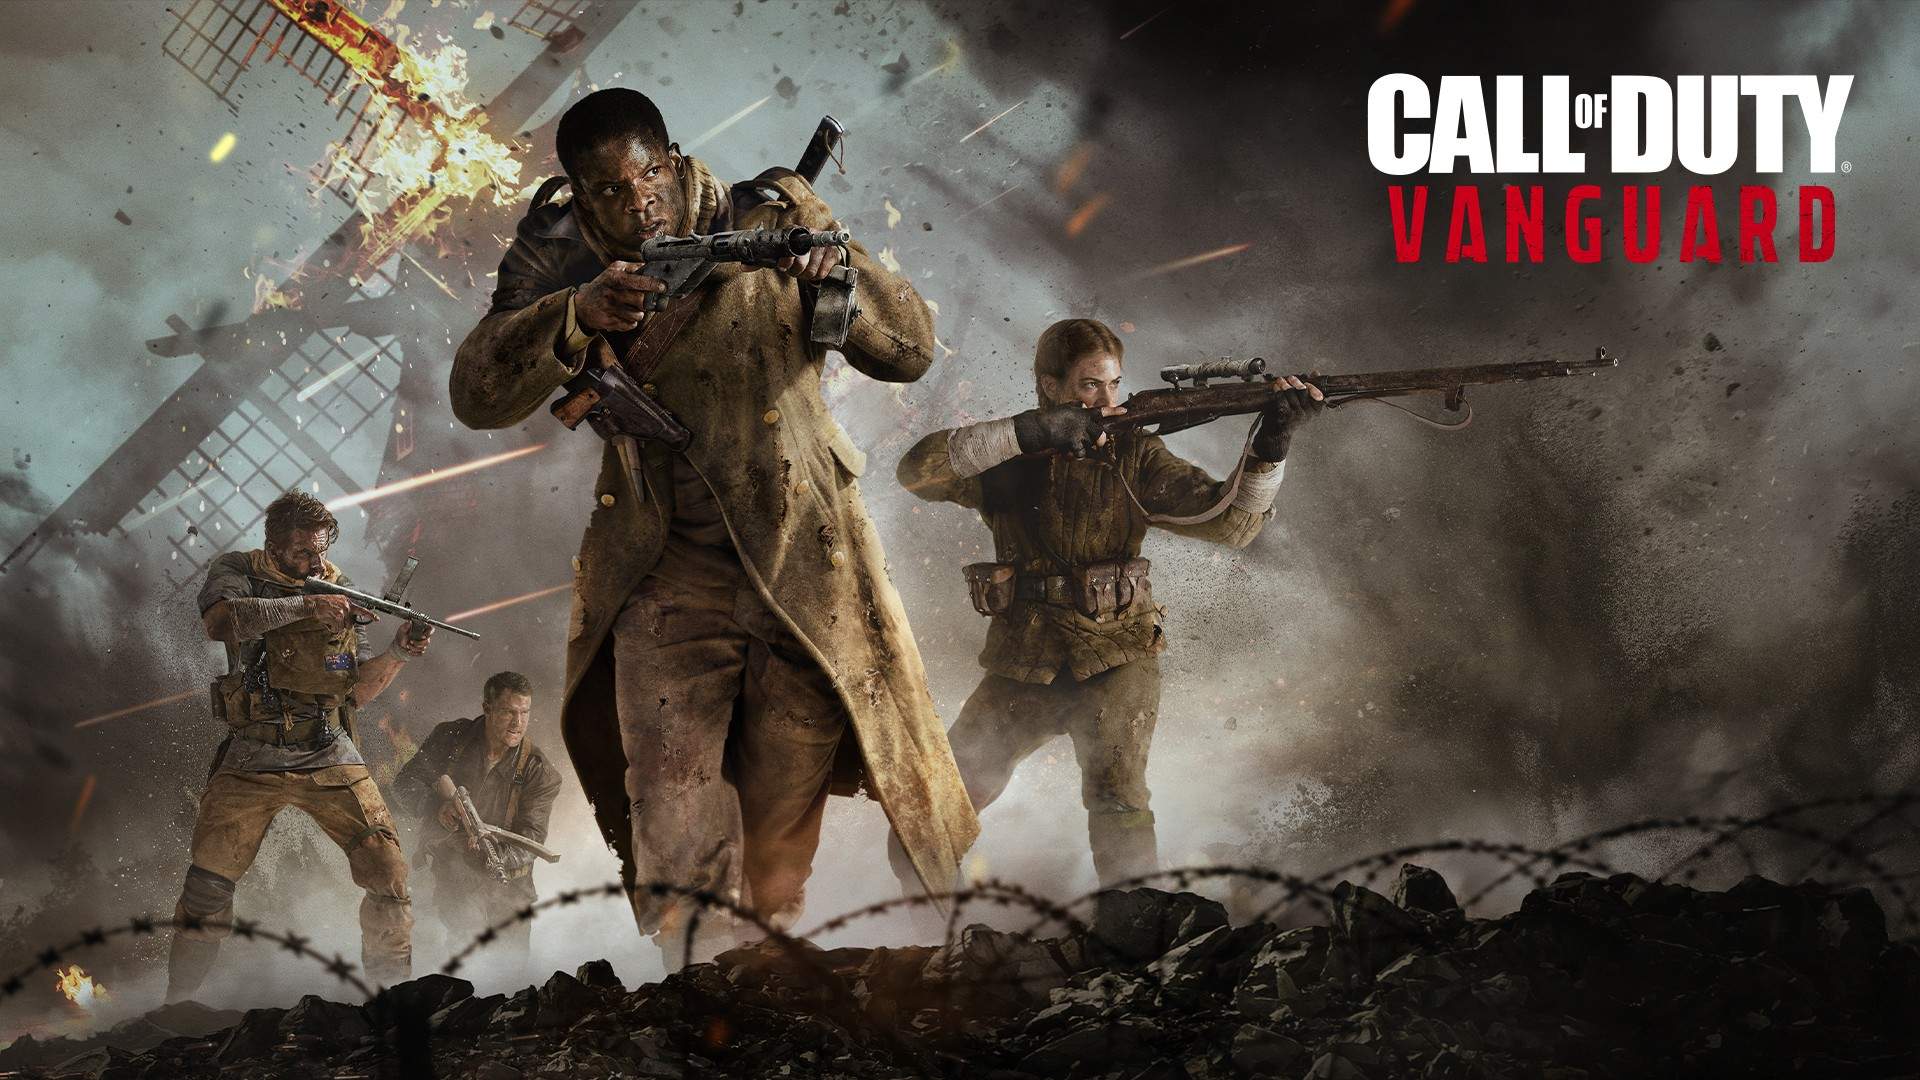 Call of Duty Vanguard cast